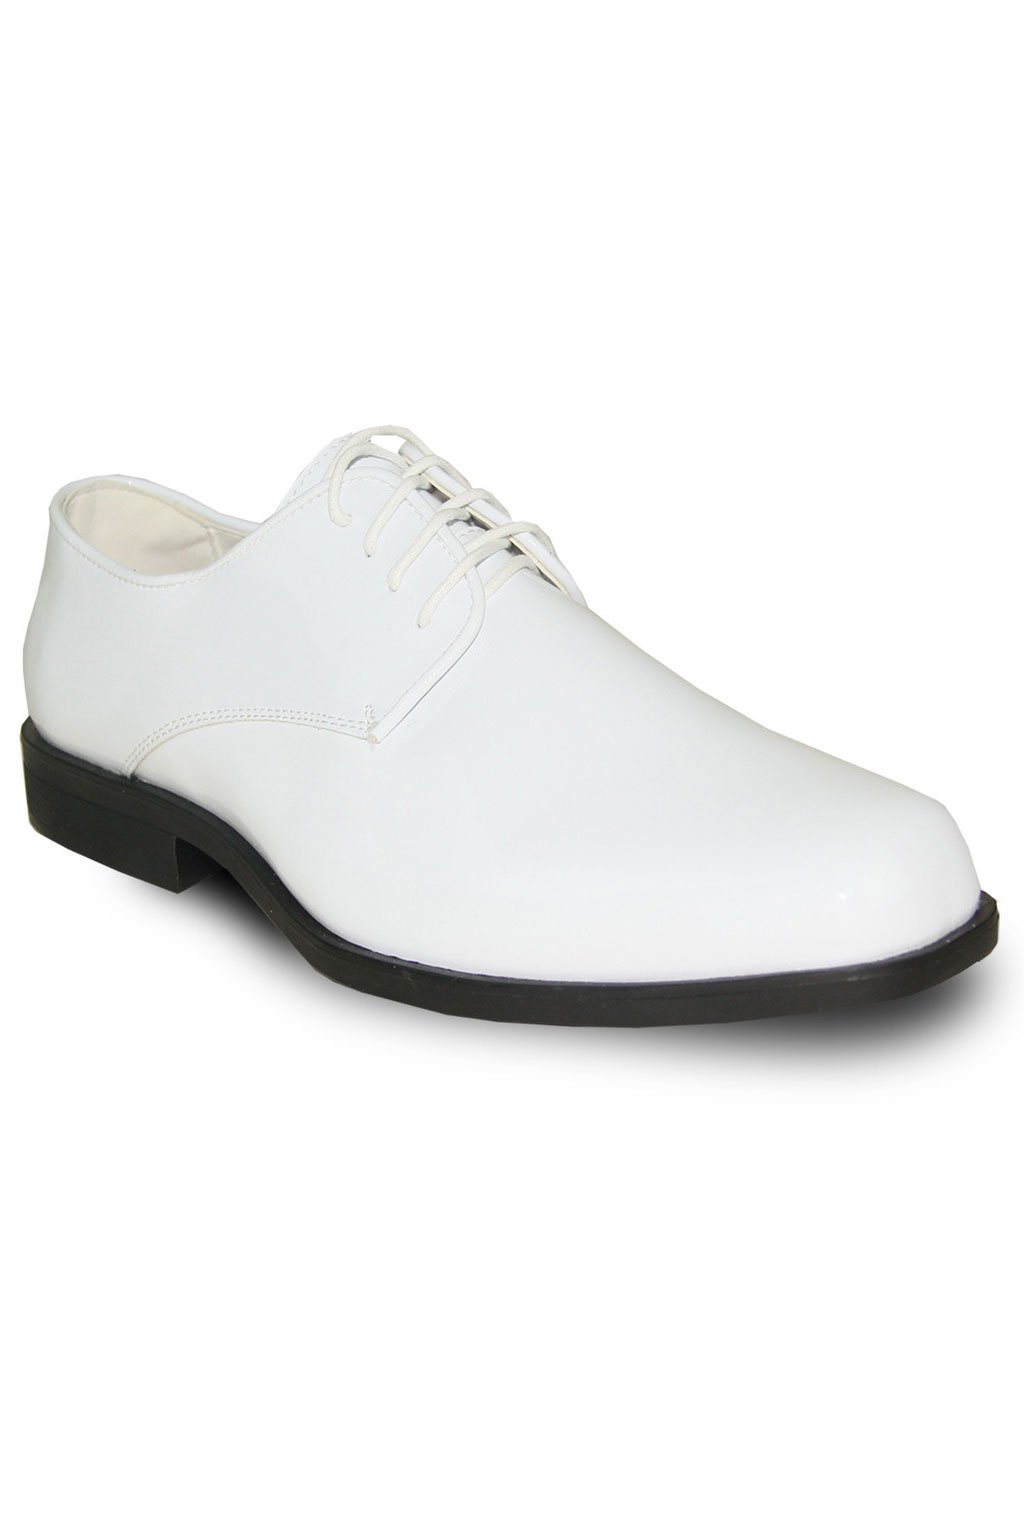 Vangelo "Sarno" White Vangelo Tuxedo Shoes